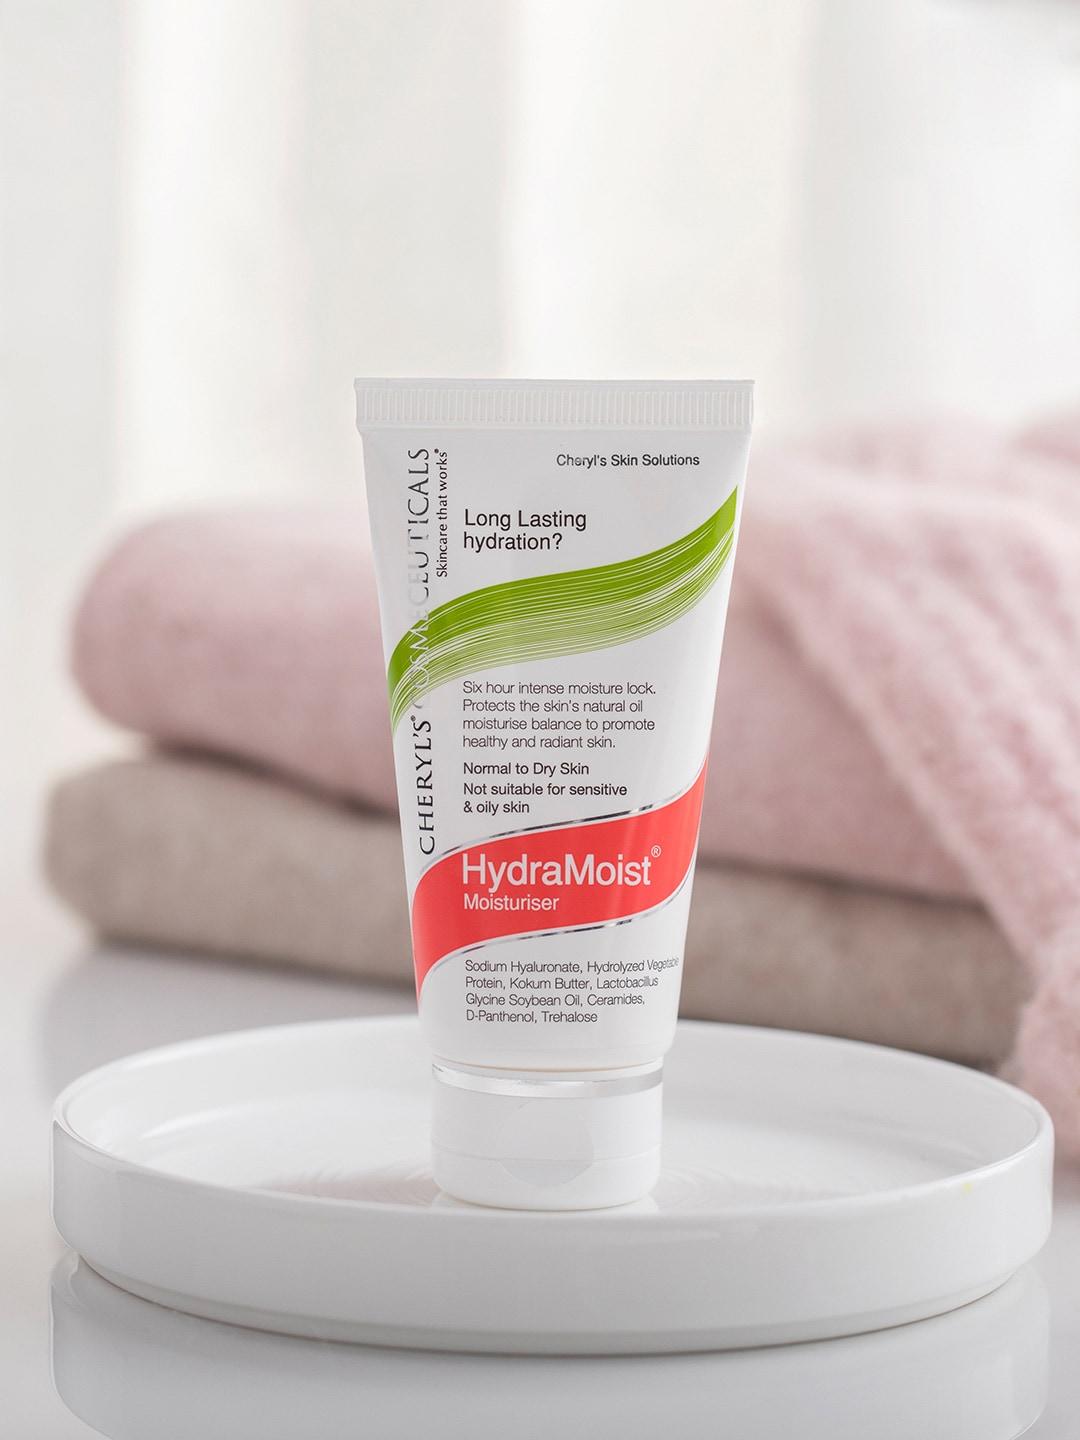 Cheryls Cosmeceuticals HydraMoist Face Moisturiser for Normal to Dry Skin - 50 ml